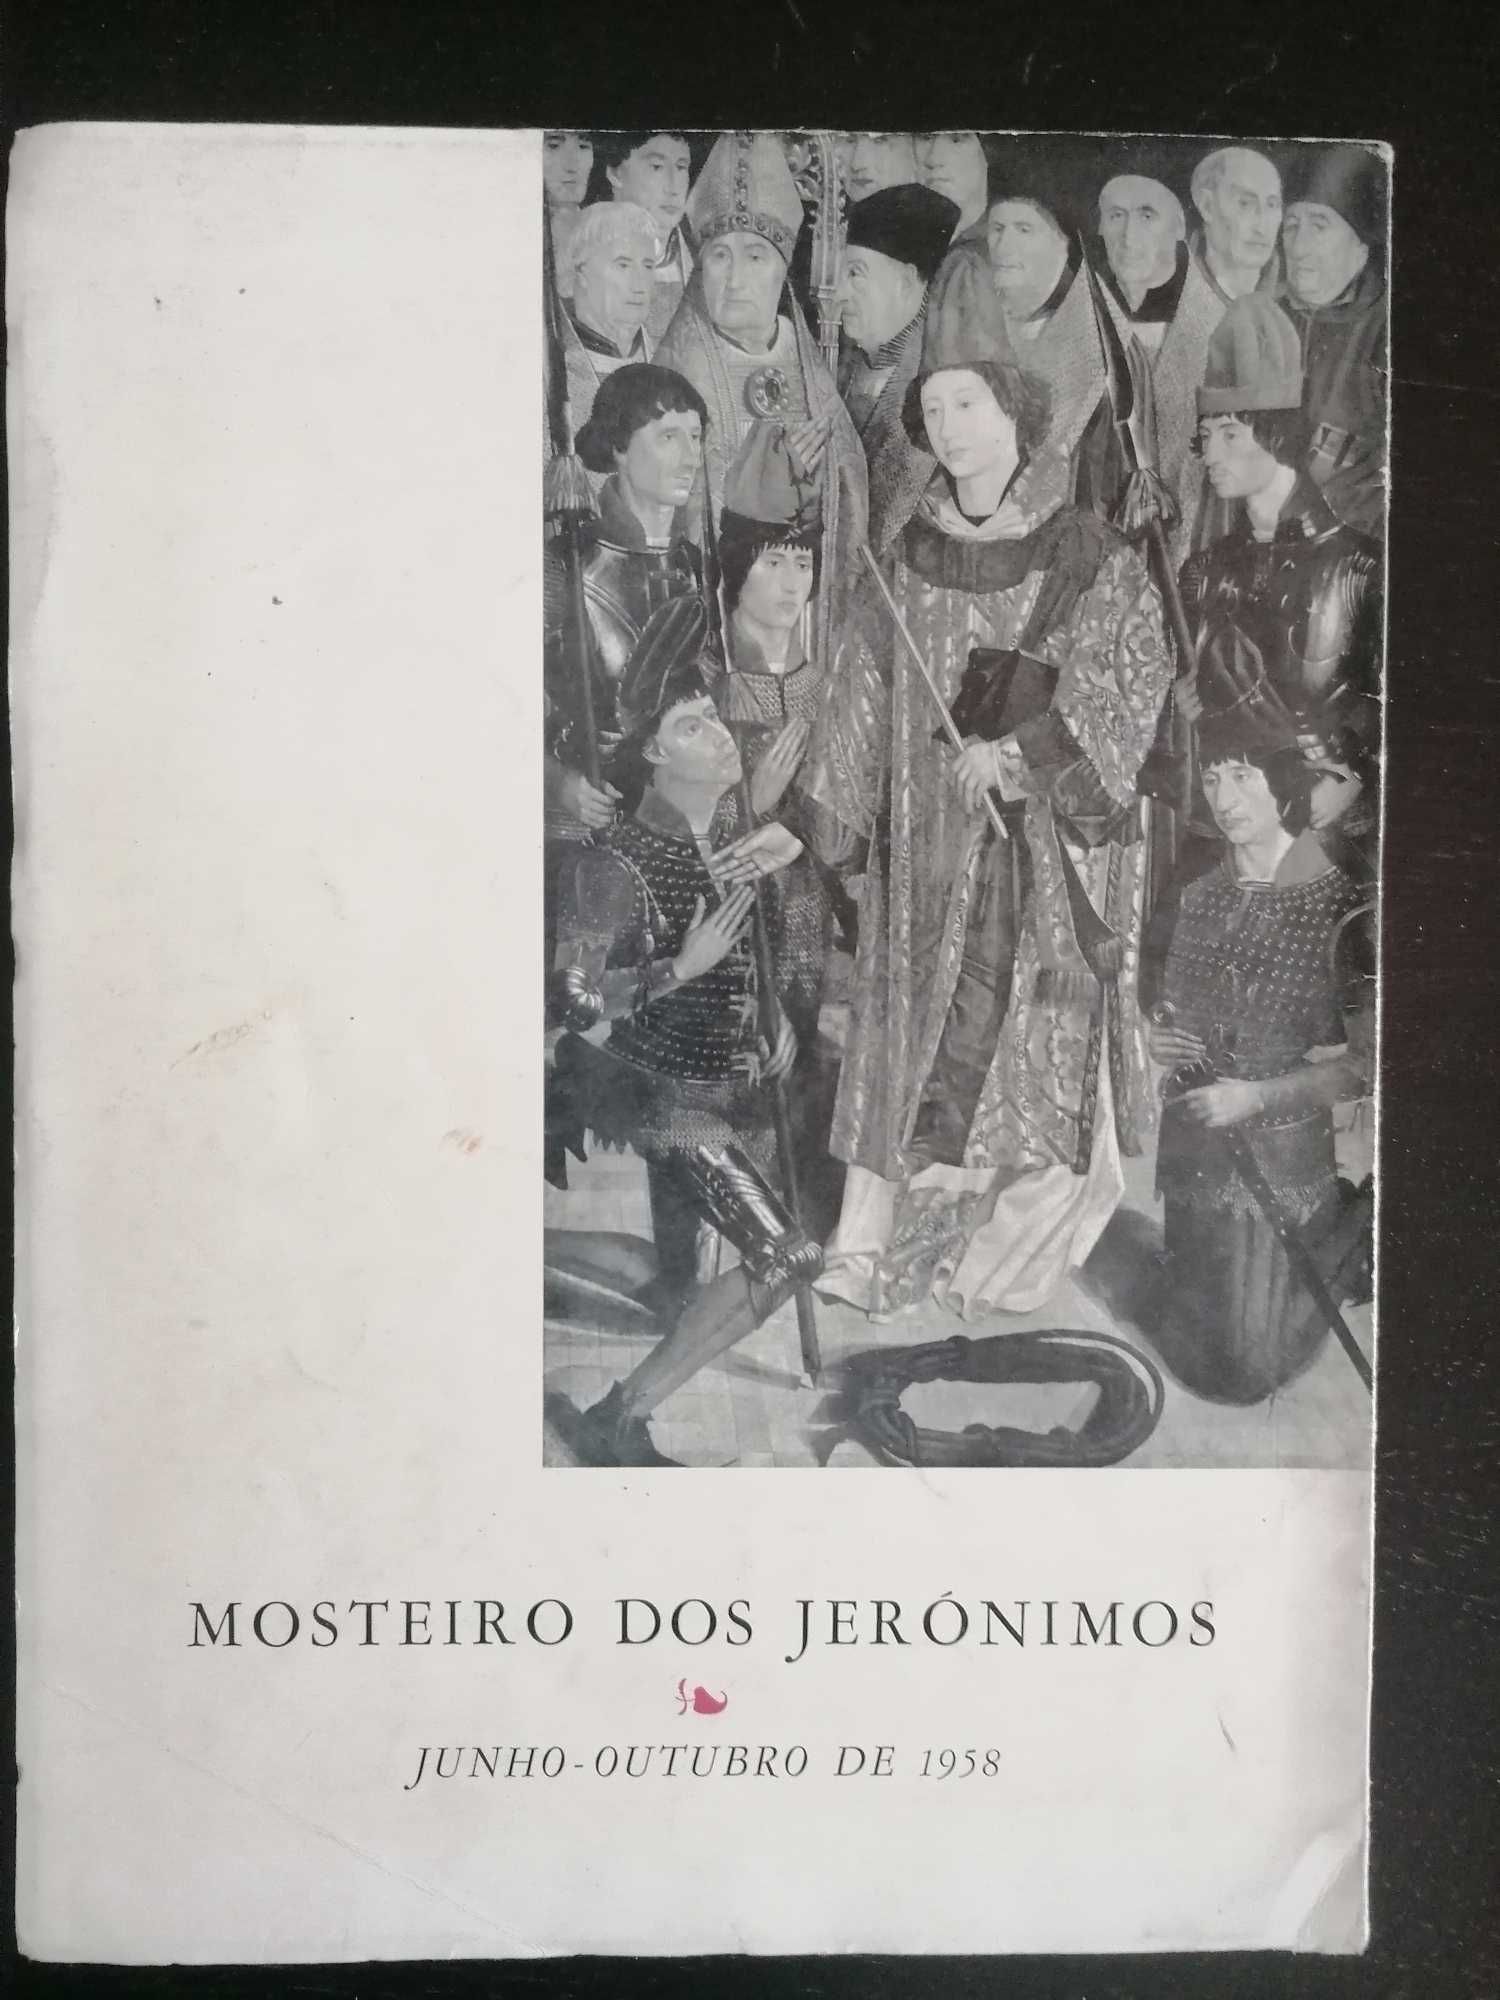 Noite do Tejo / Mosteiro dos Jerónimos 1958